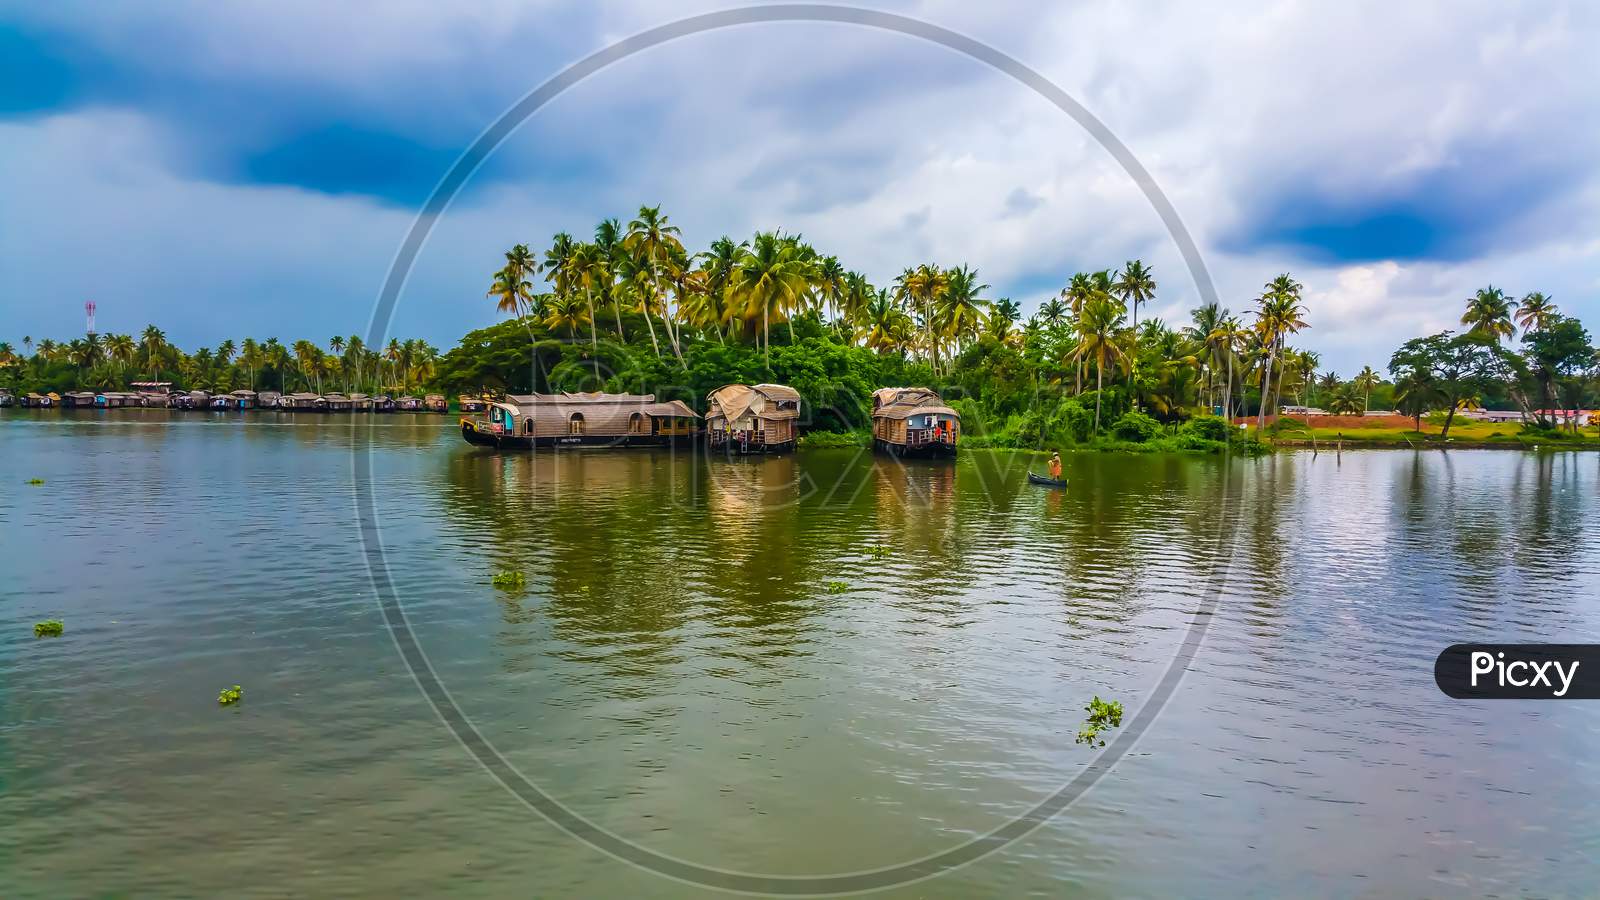 Houseboats anchored on the backwaters of kerala